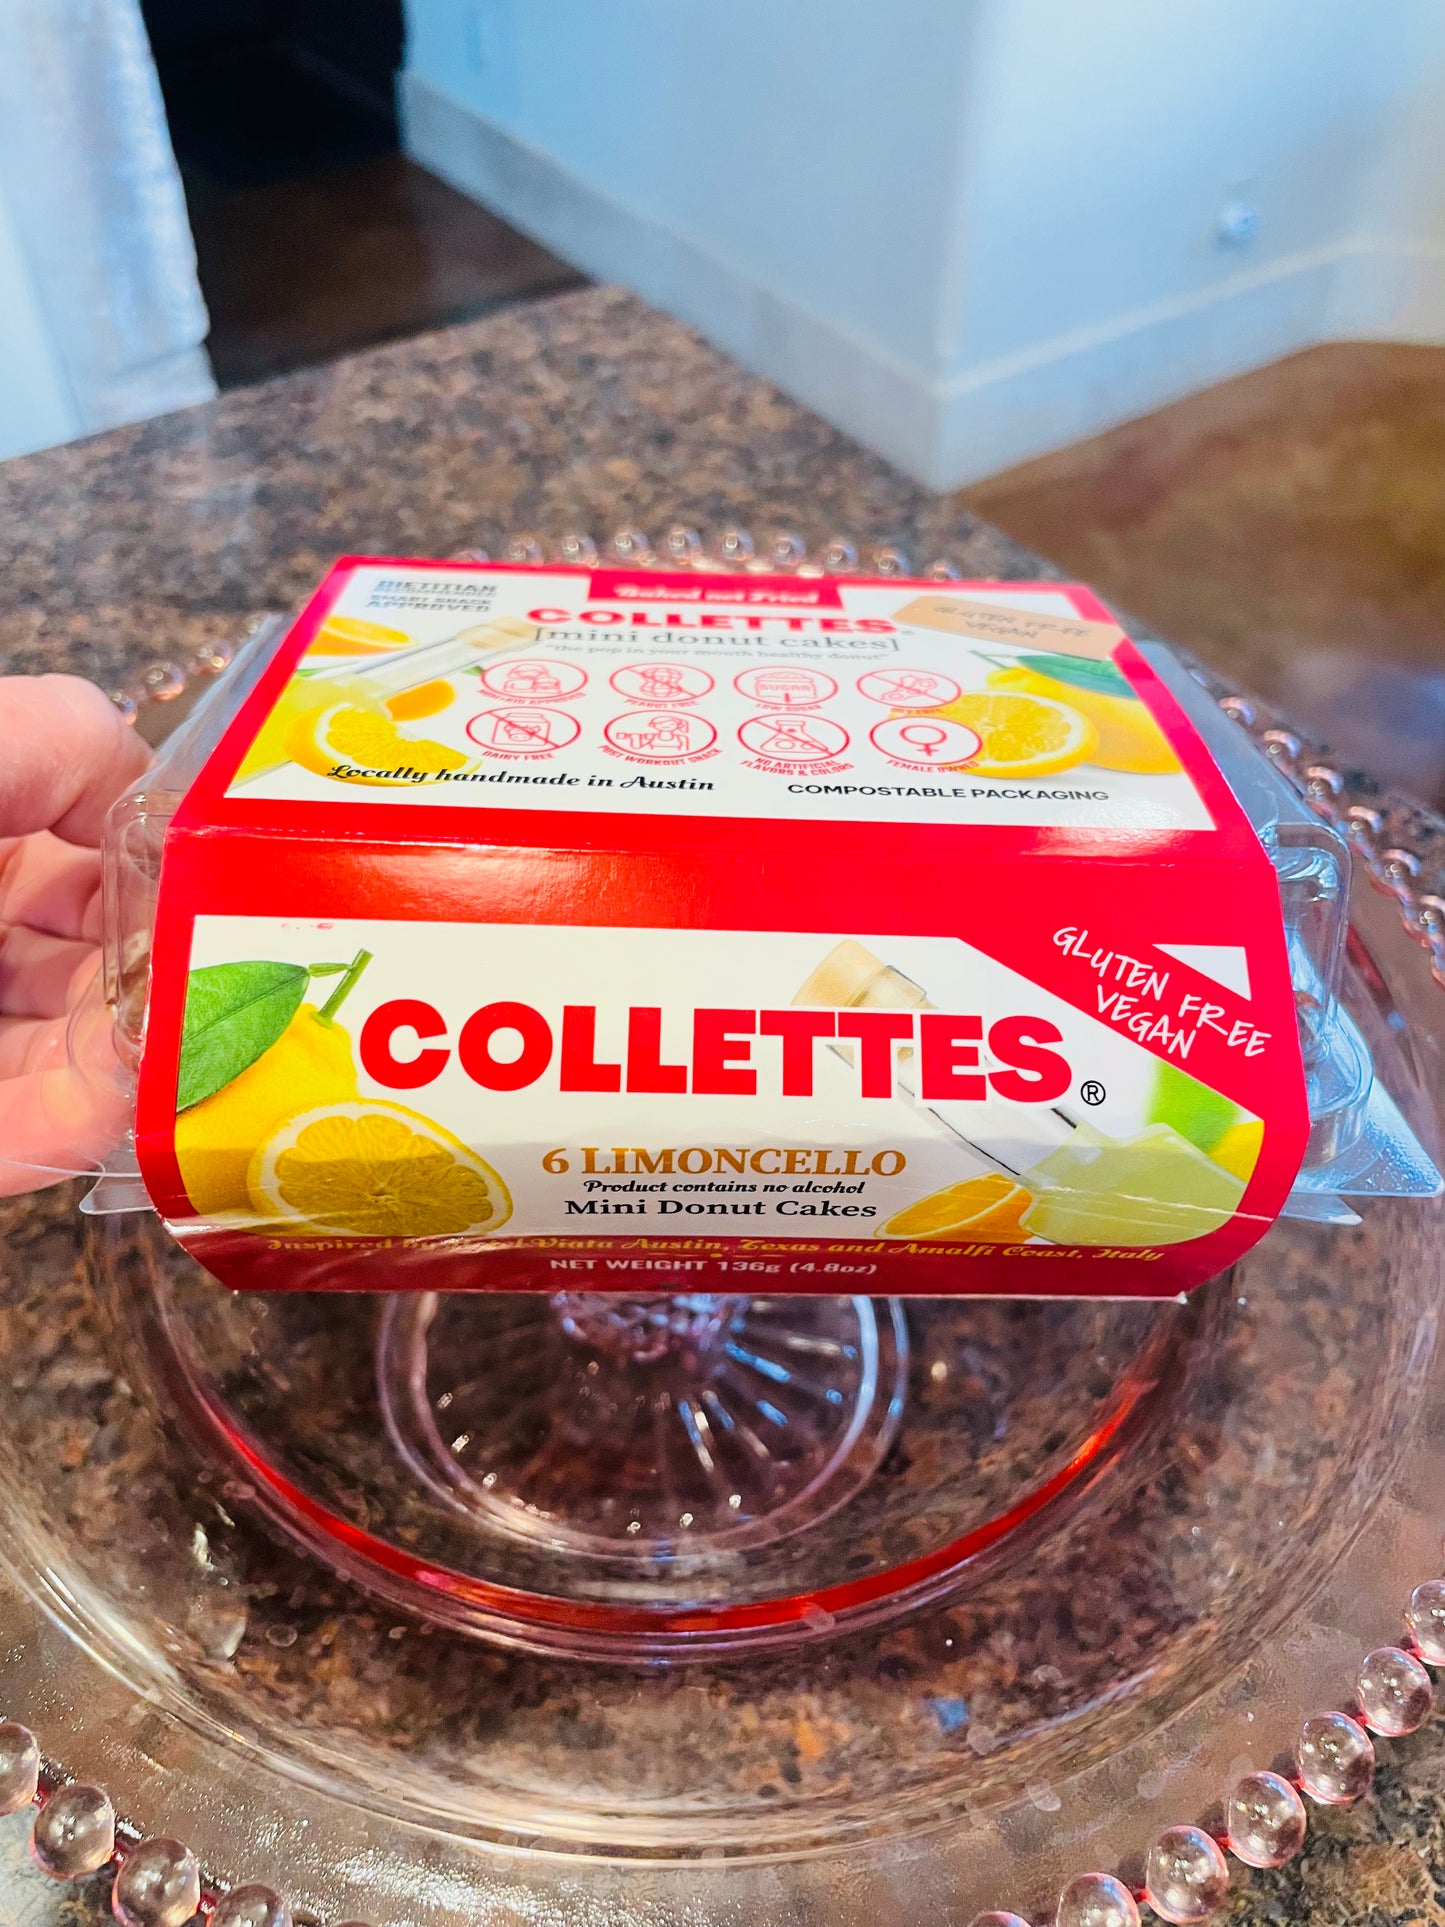 Limoncello collettes mini donut cakes gluten free, vegan (Available year round)